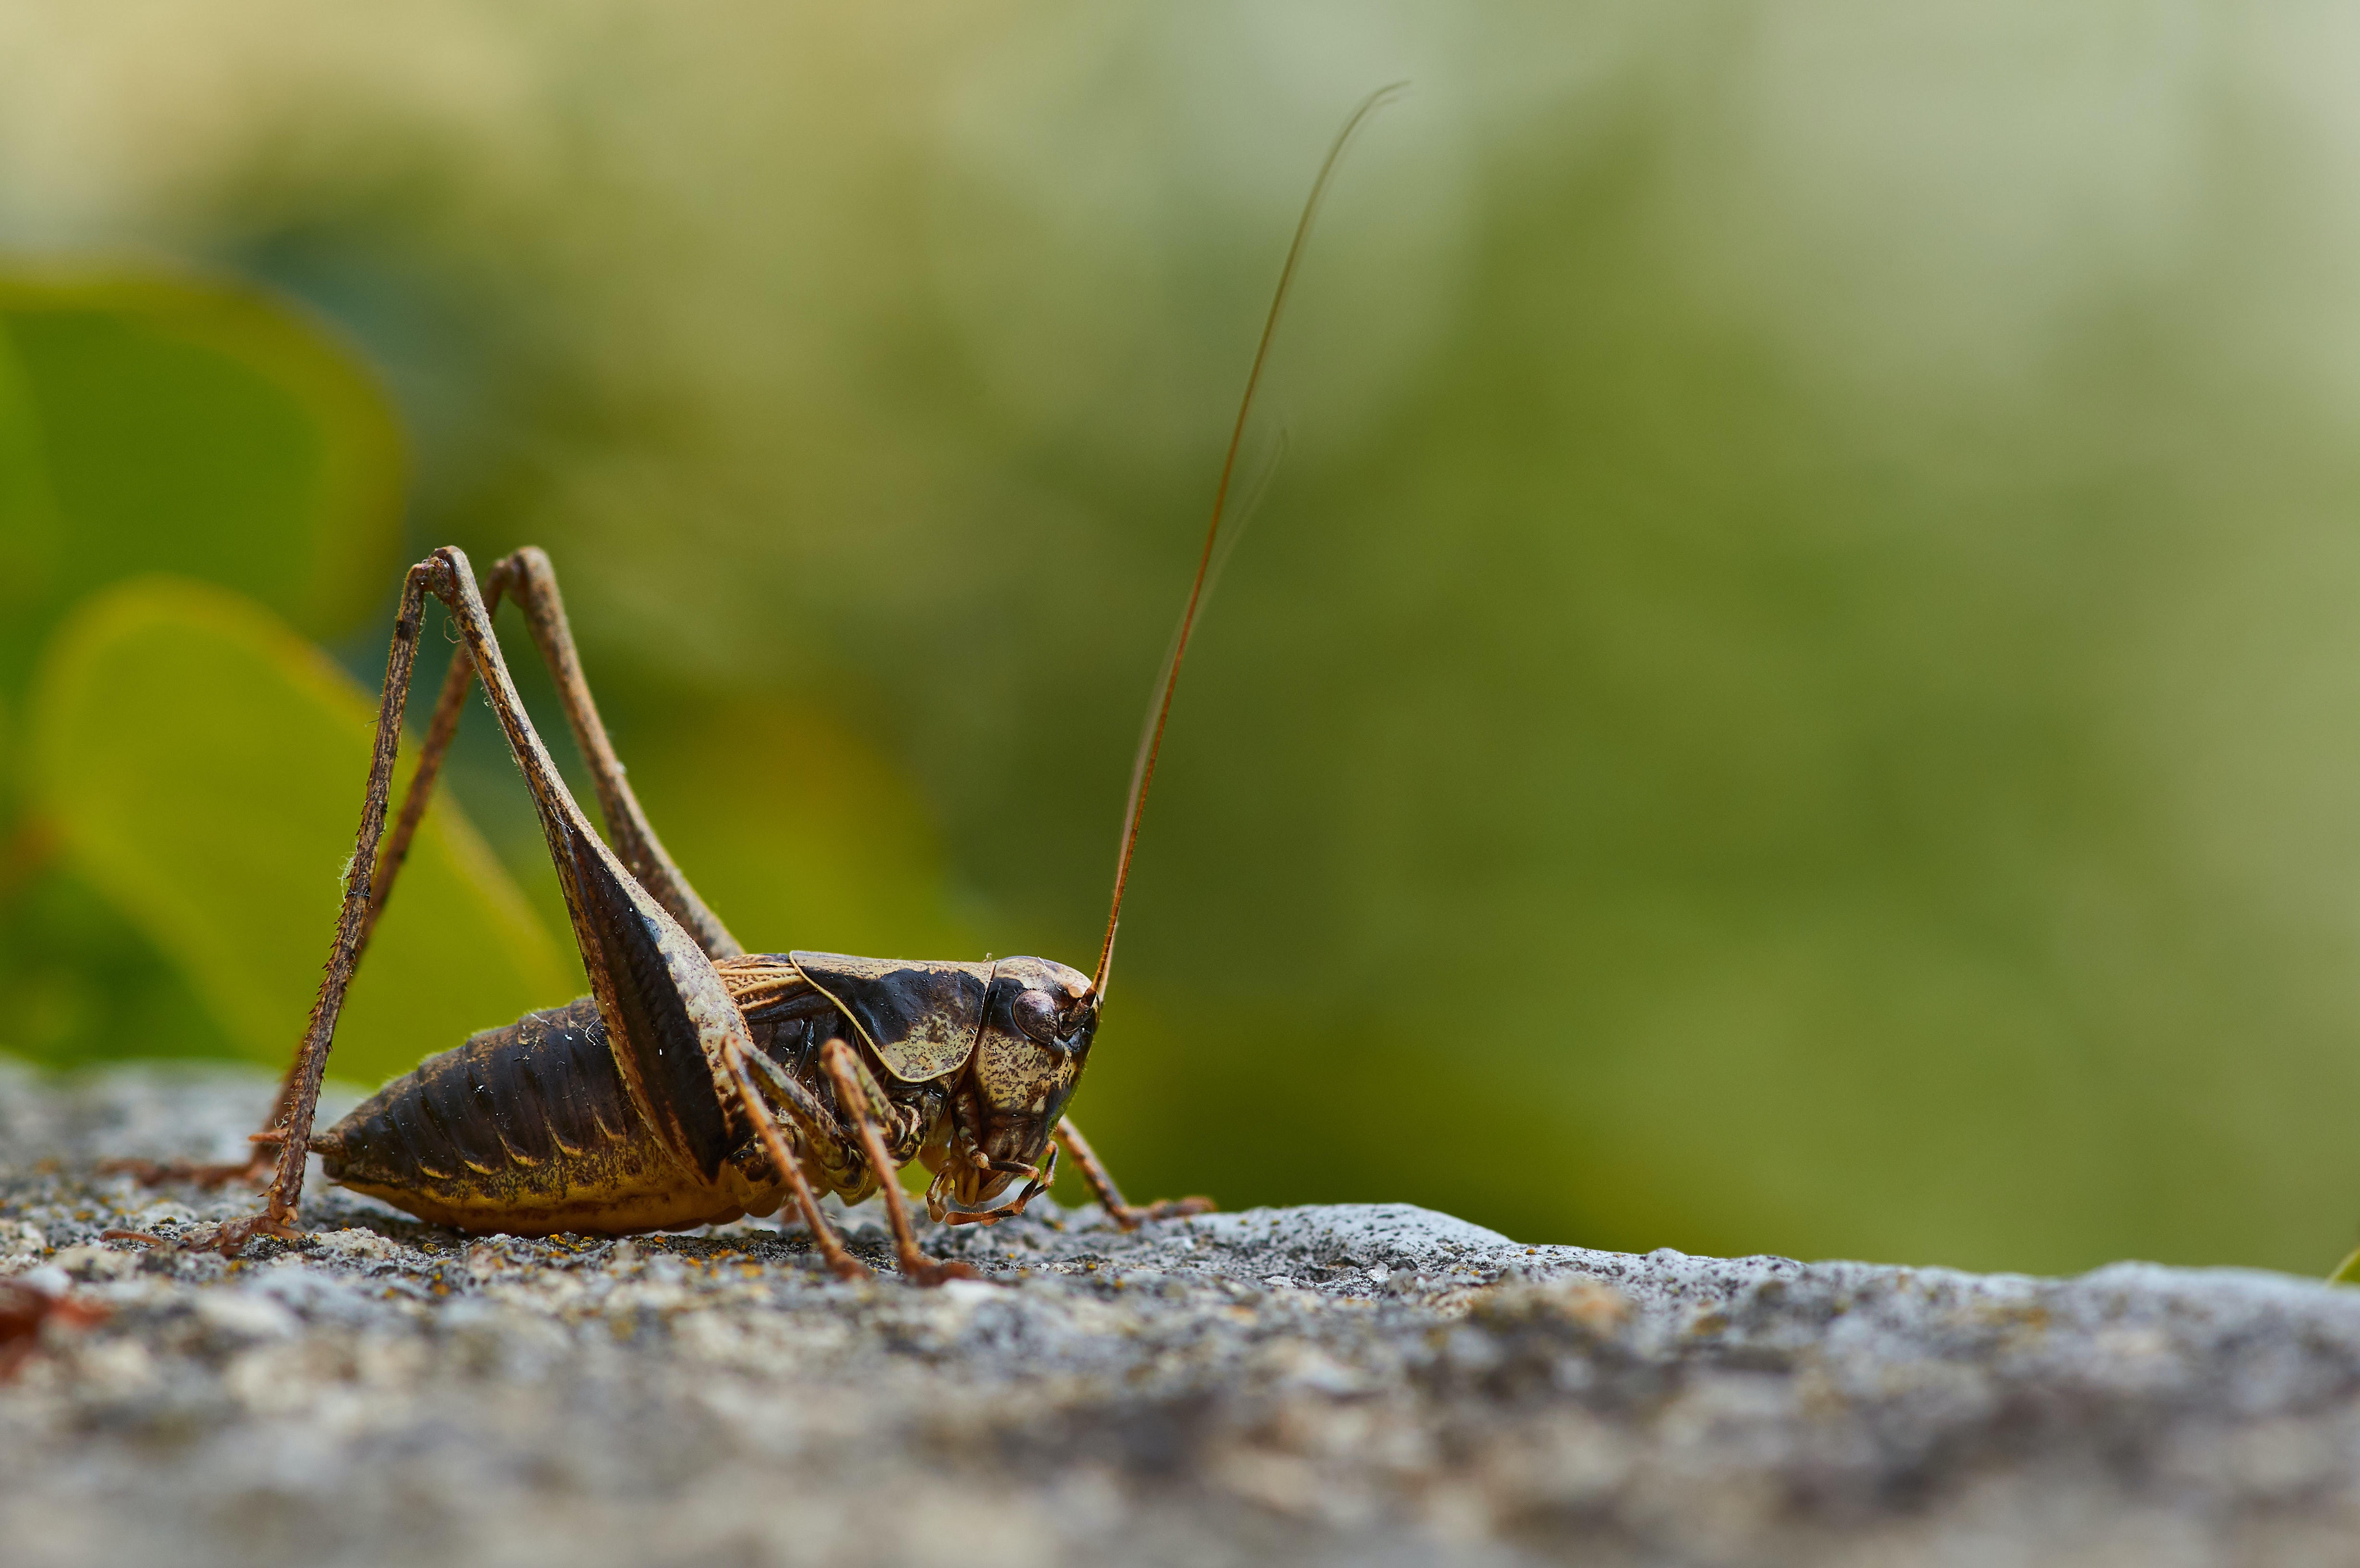 brown grasshopper on gray rock during daytime